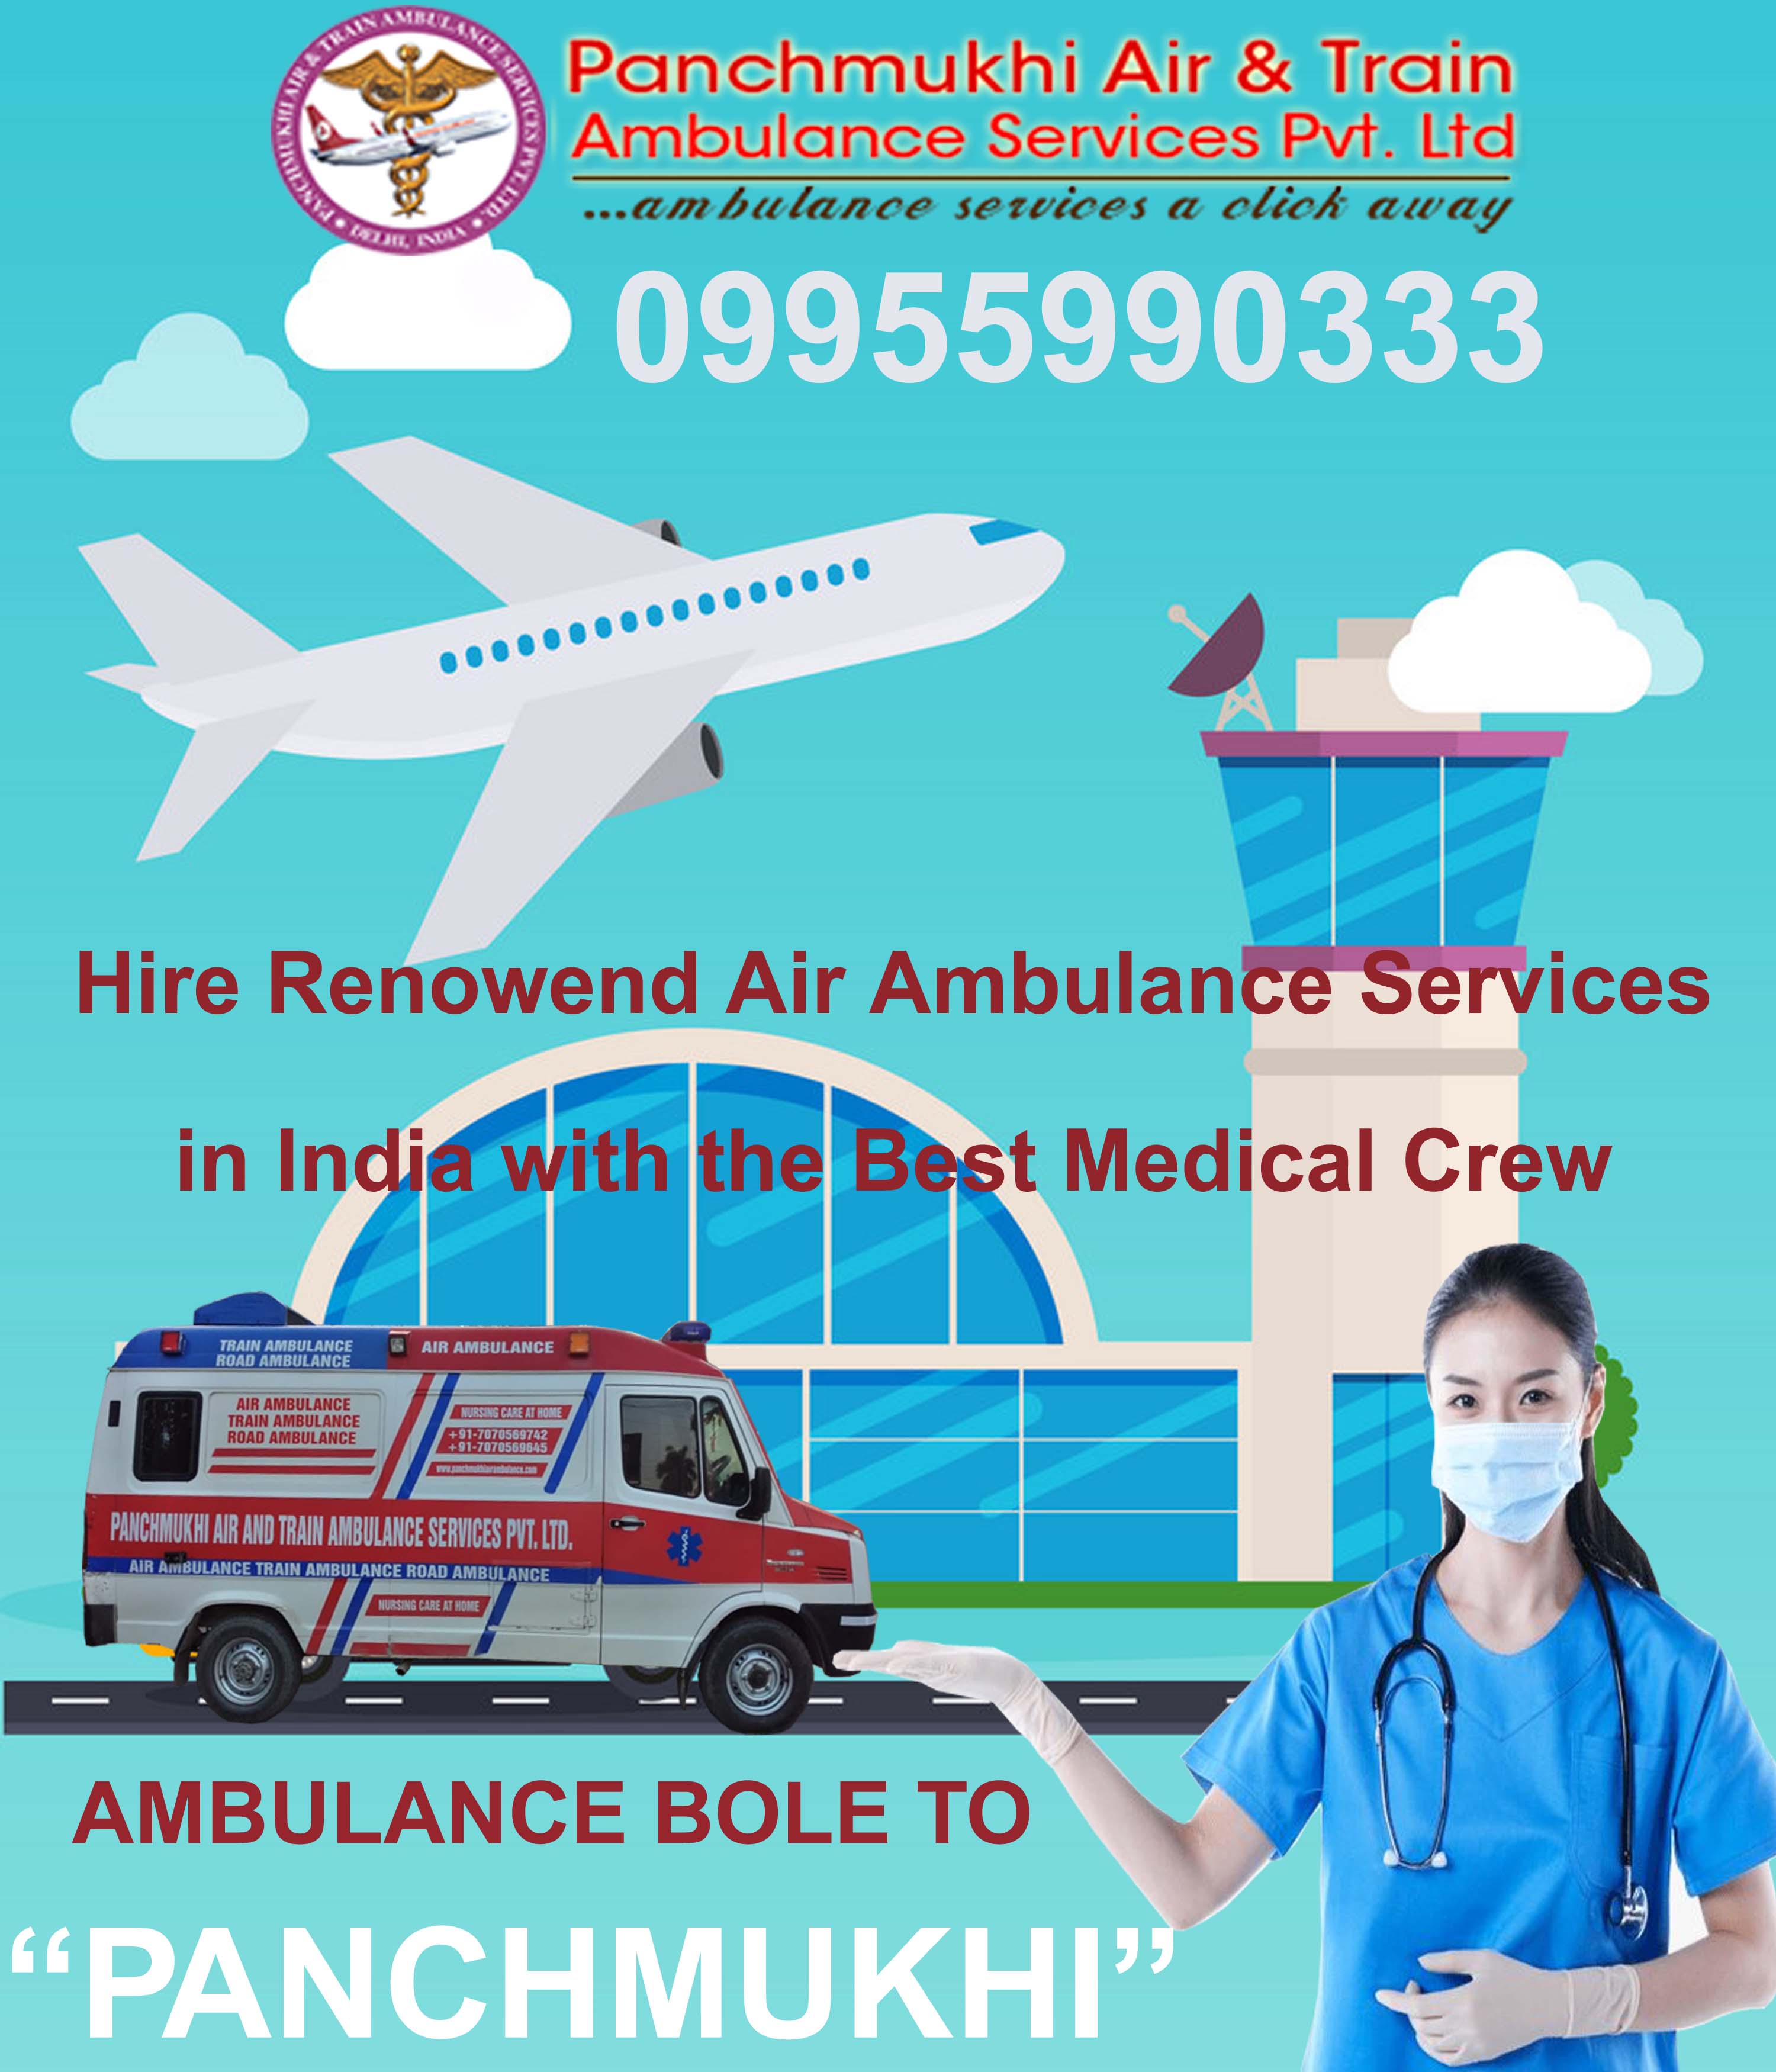 Panchmukhi-Air-Ambulance-Services-in-Delhi-at-low-cost